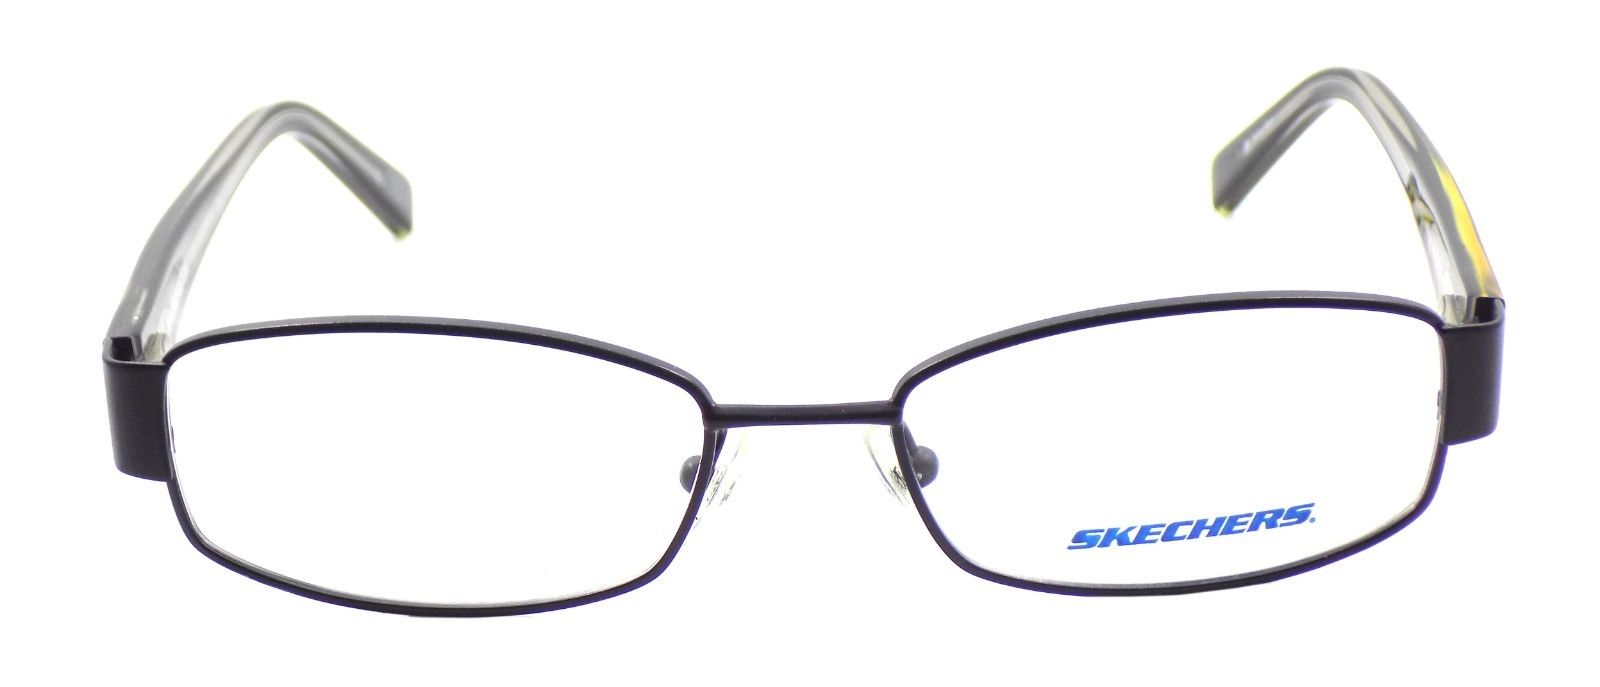 2-SKECHERS SK2083 BLK Women's Eyeglasses Frames 51-17-135 Matte Black + CASE-715583673625-IKSpecs